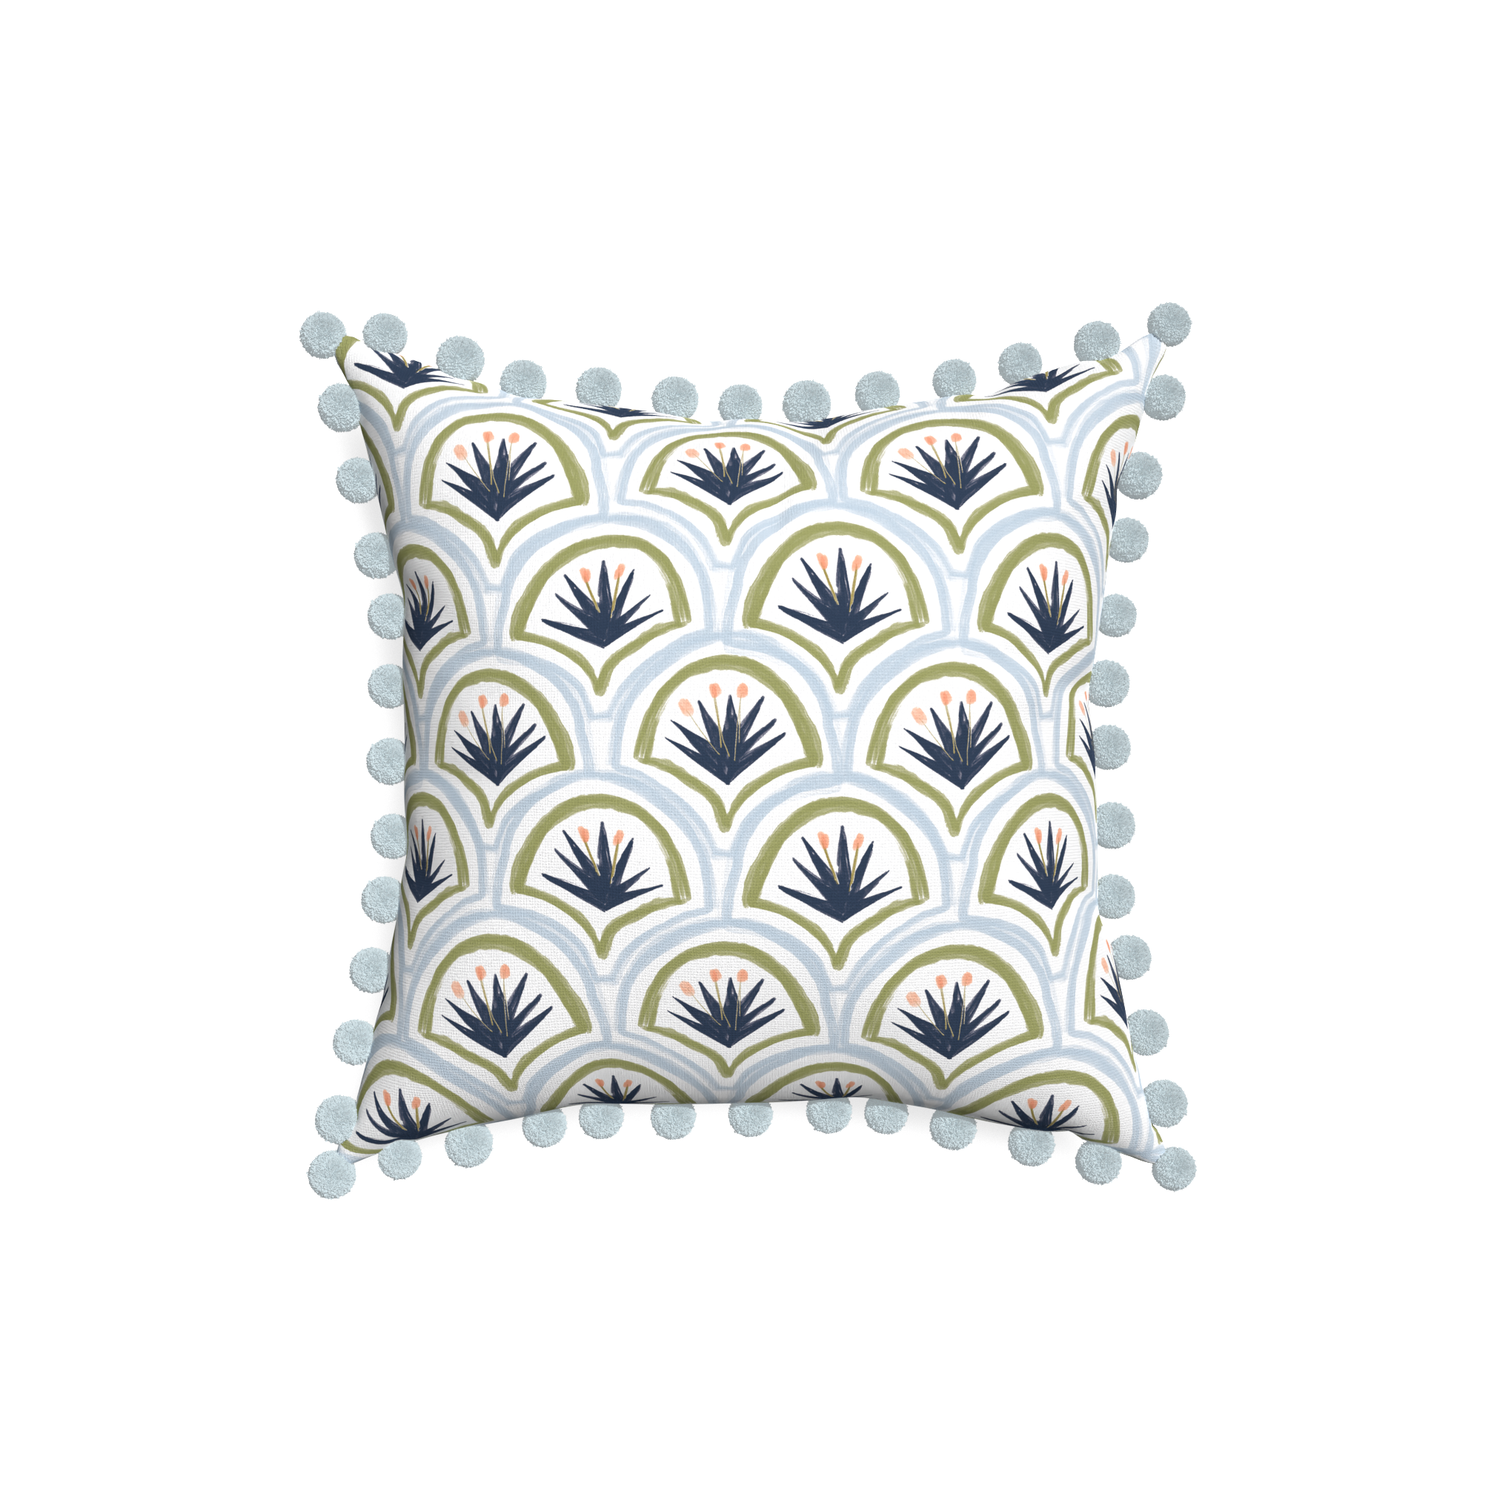 18-square thatcher midnight custom art deco palm patternpillow with powder pom pom on white background